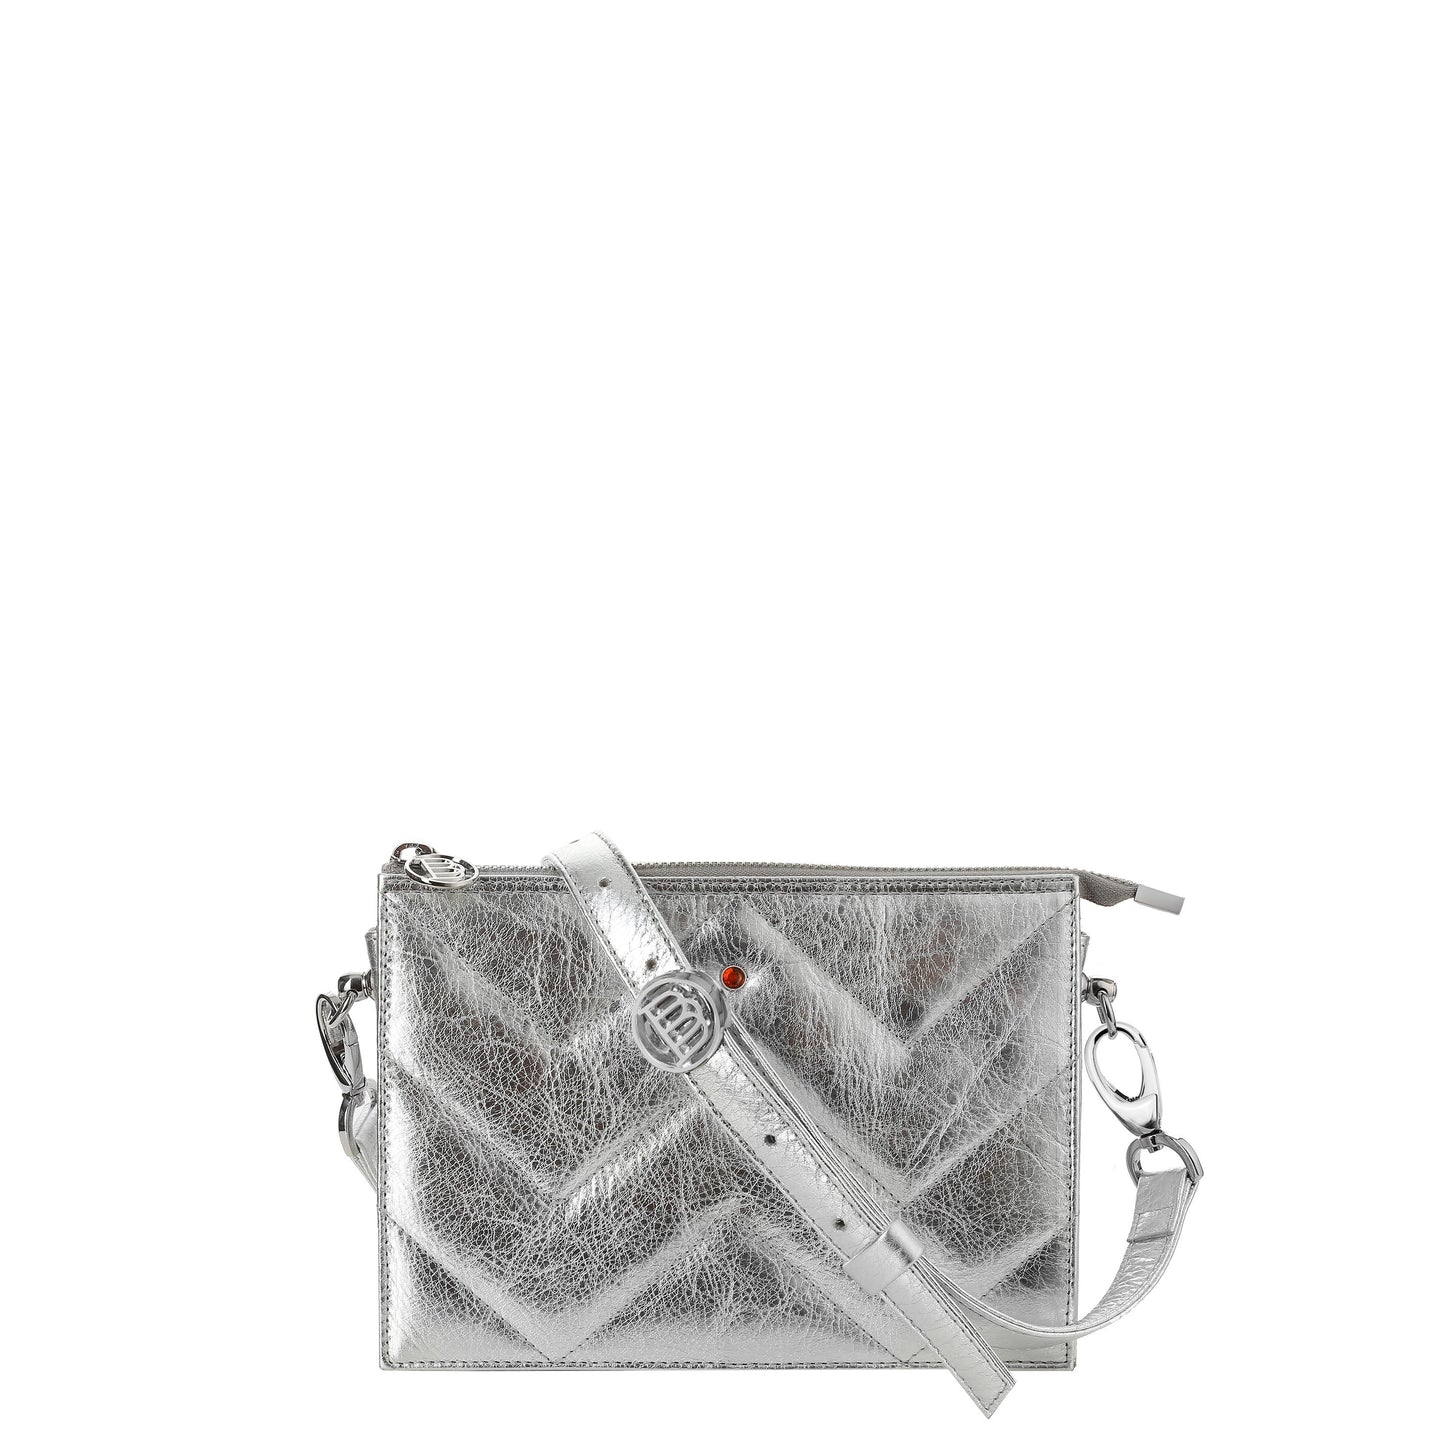 CICLE LAMINATO SILVER leather women's handbag